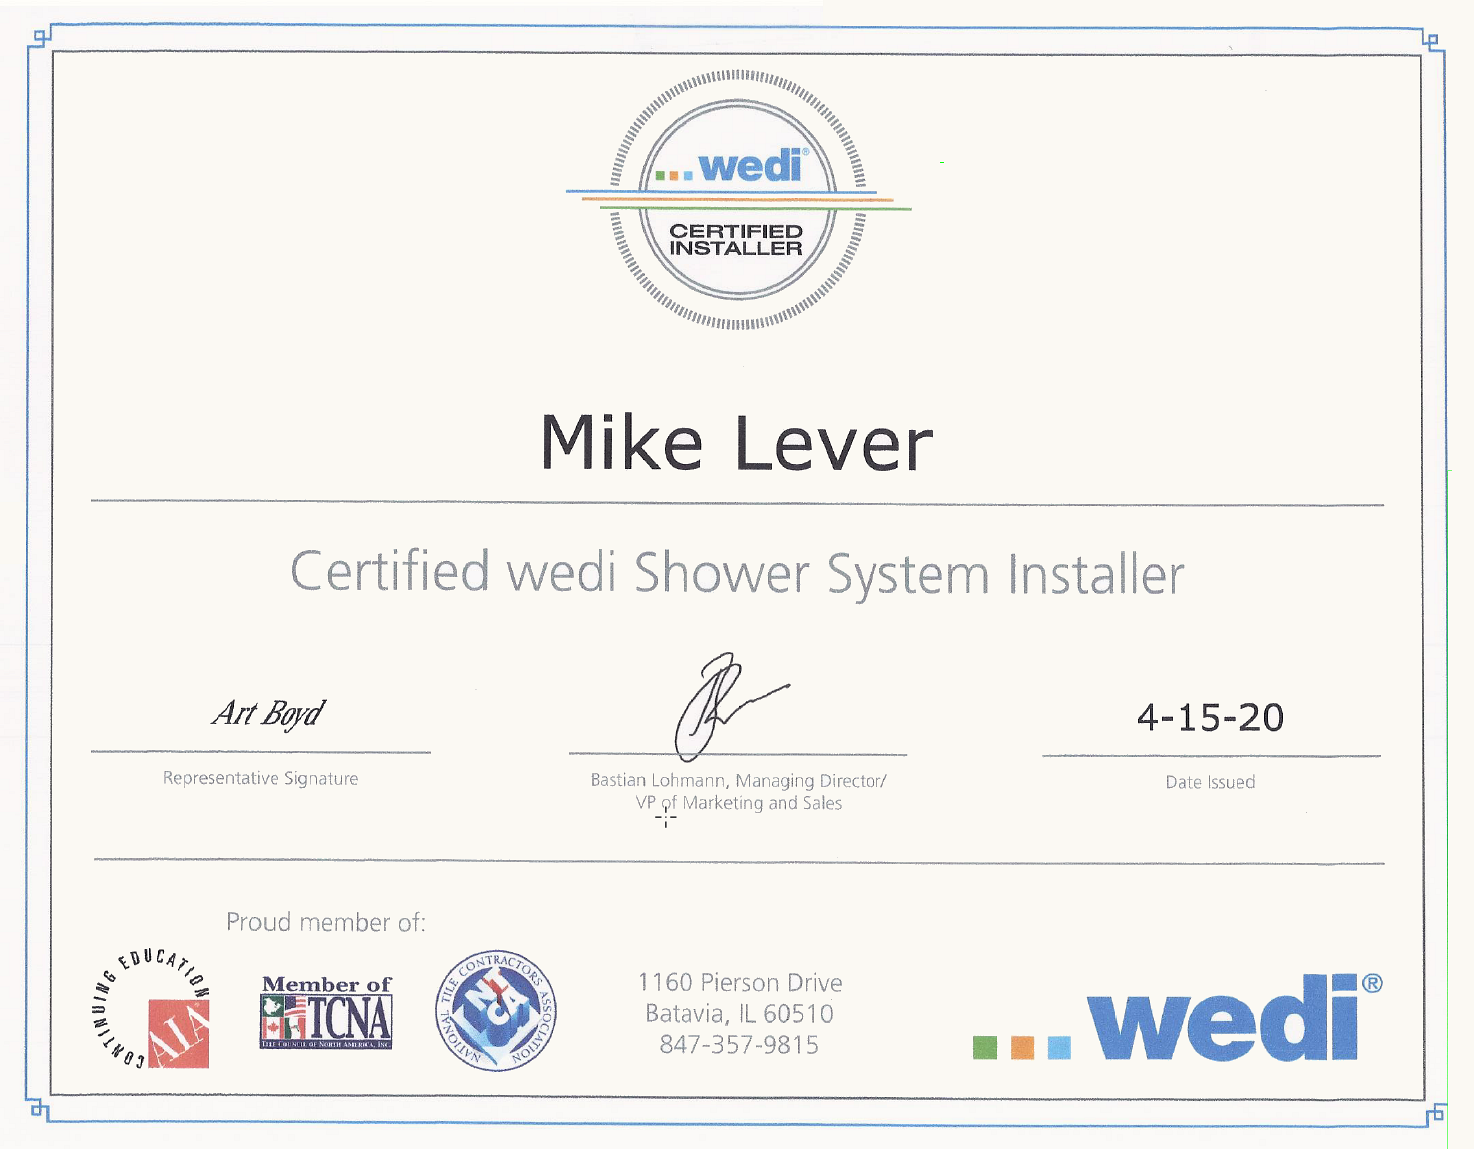 Certified wedi Shower System Installer